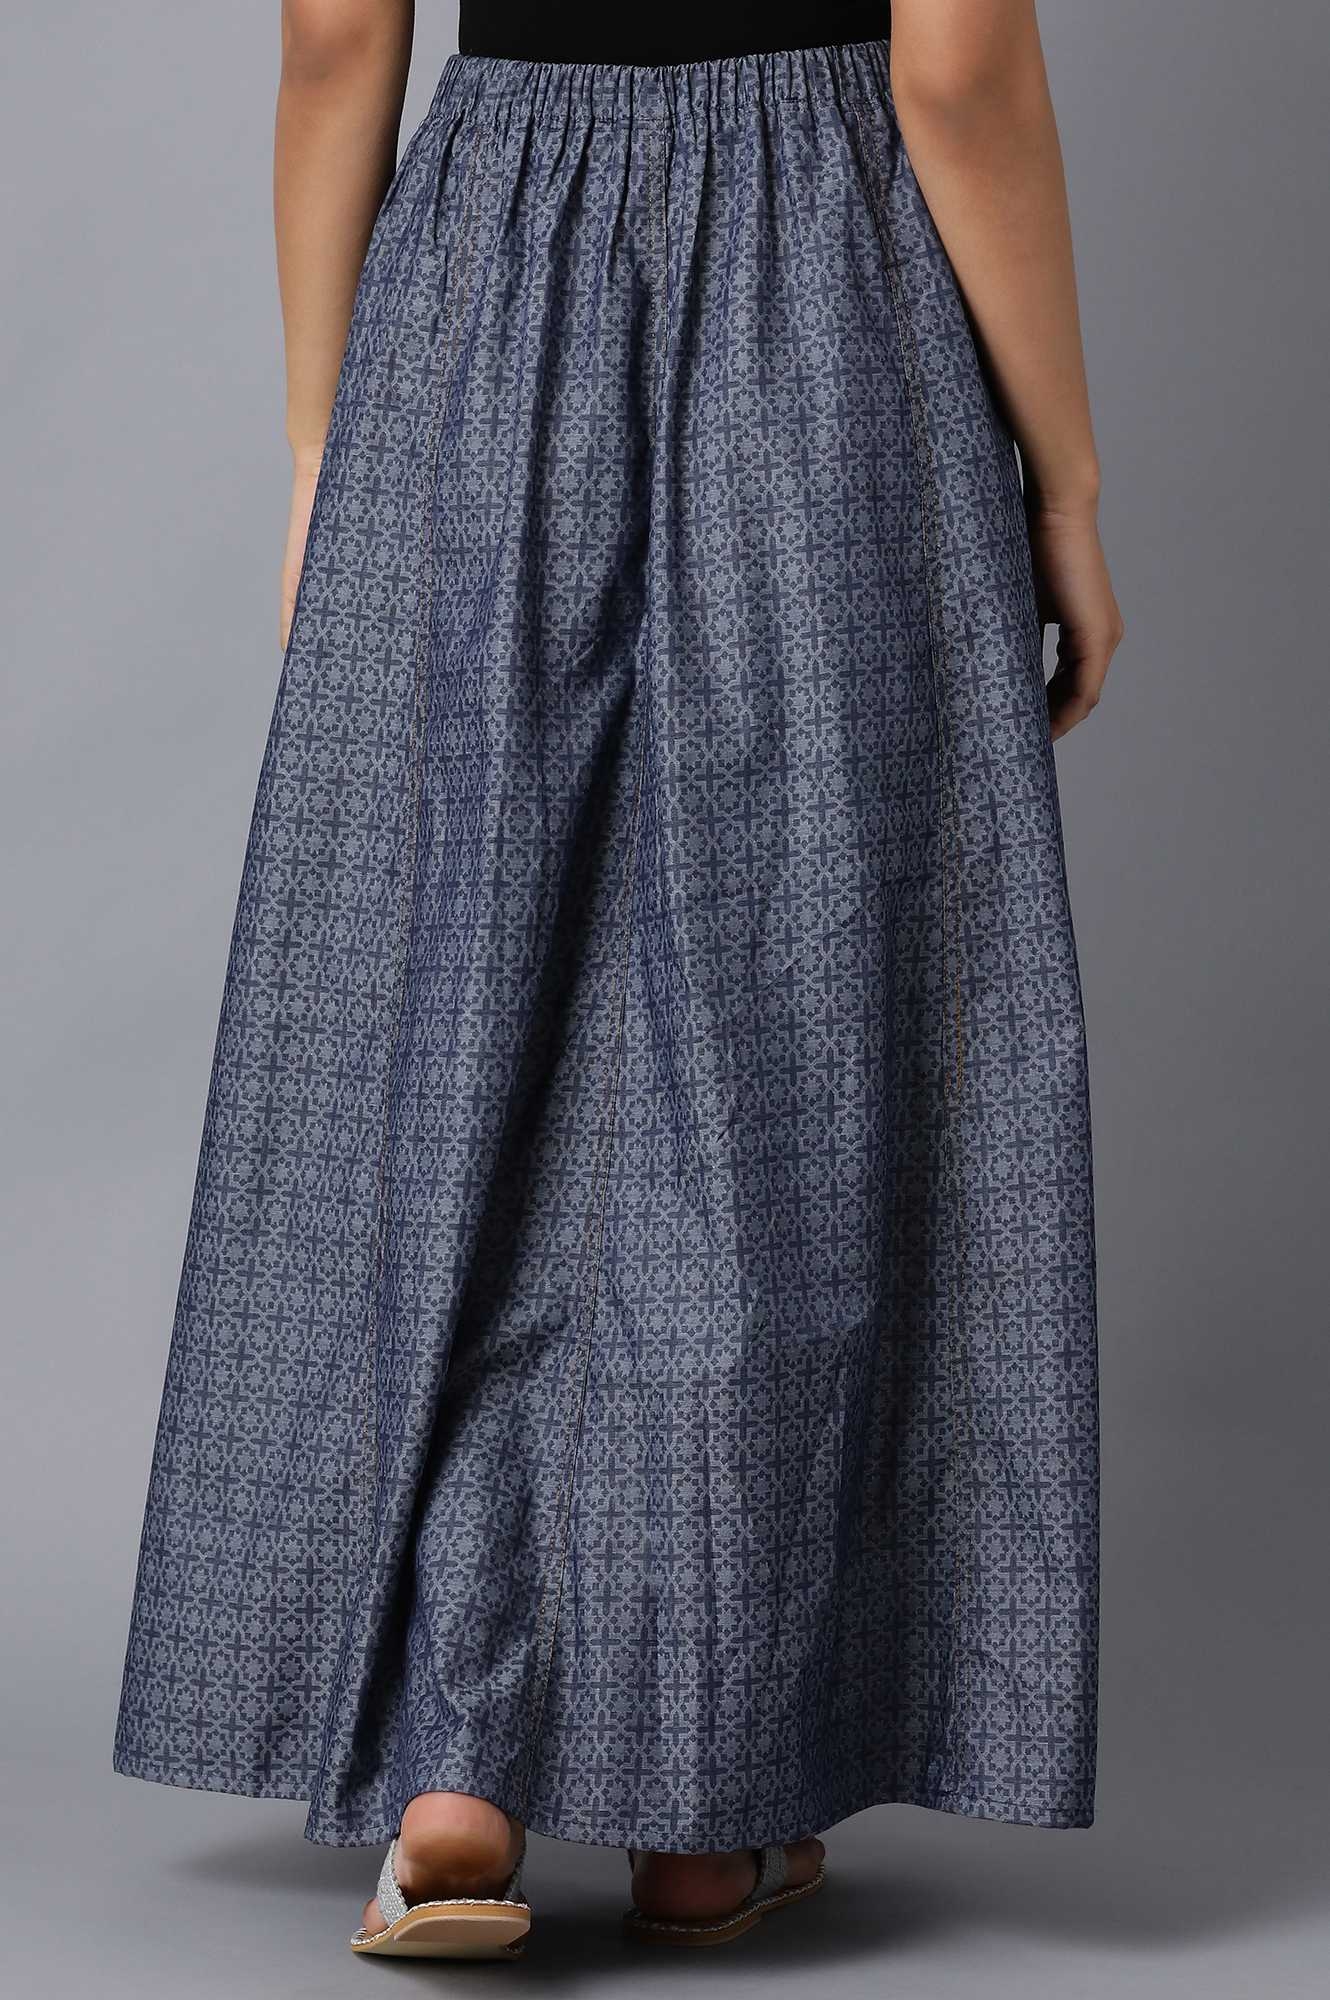 SO CUTE! Zara JACQUARD SKIRT-ref 2889/745-mini skirt with bow-sea  green-size S | eBay